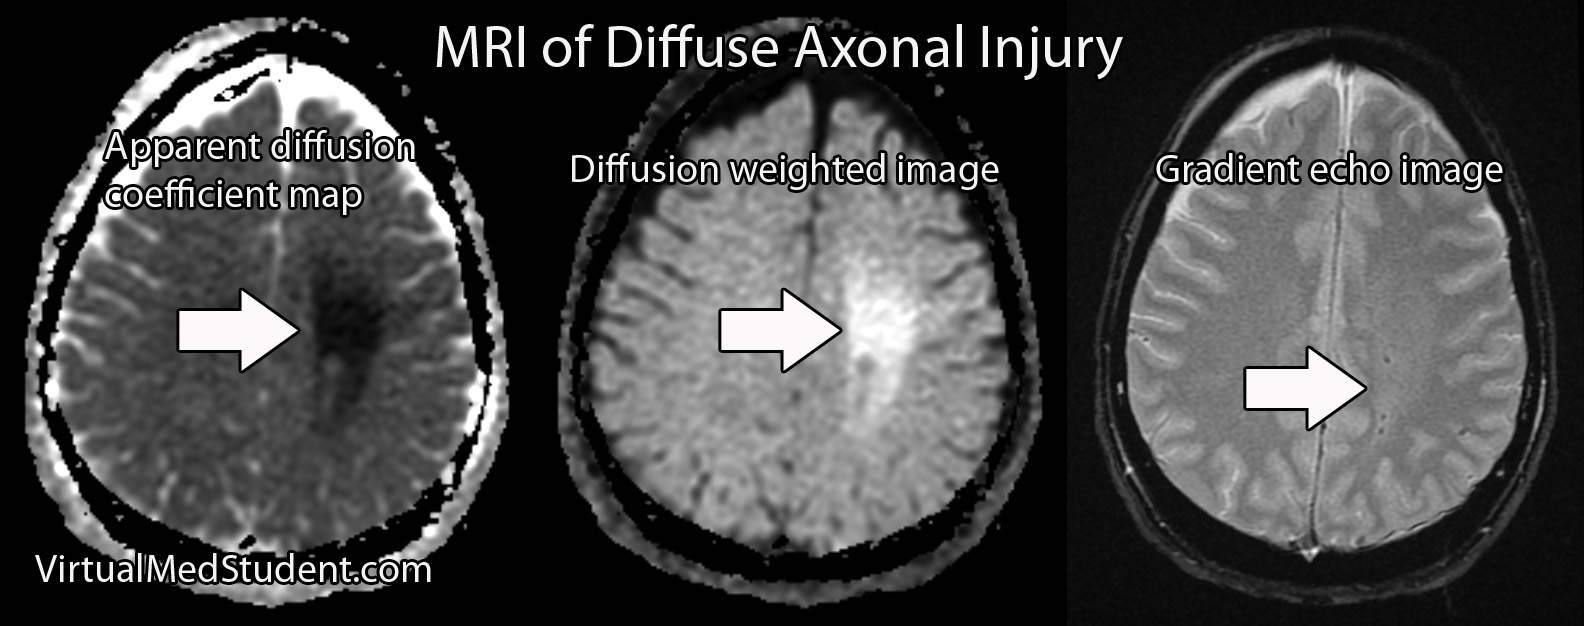 MRI of diffuse axonal injury